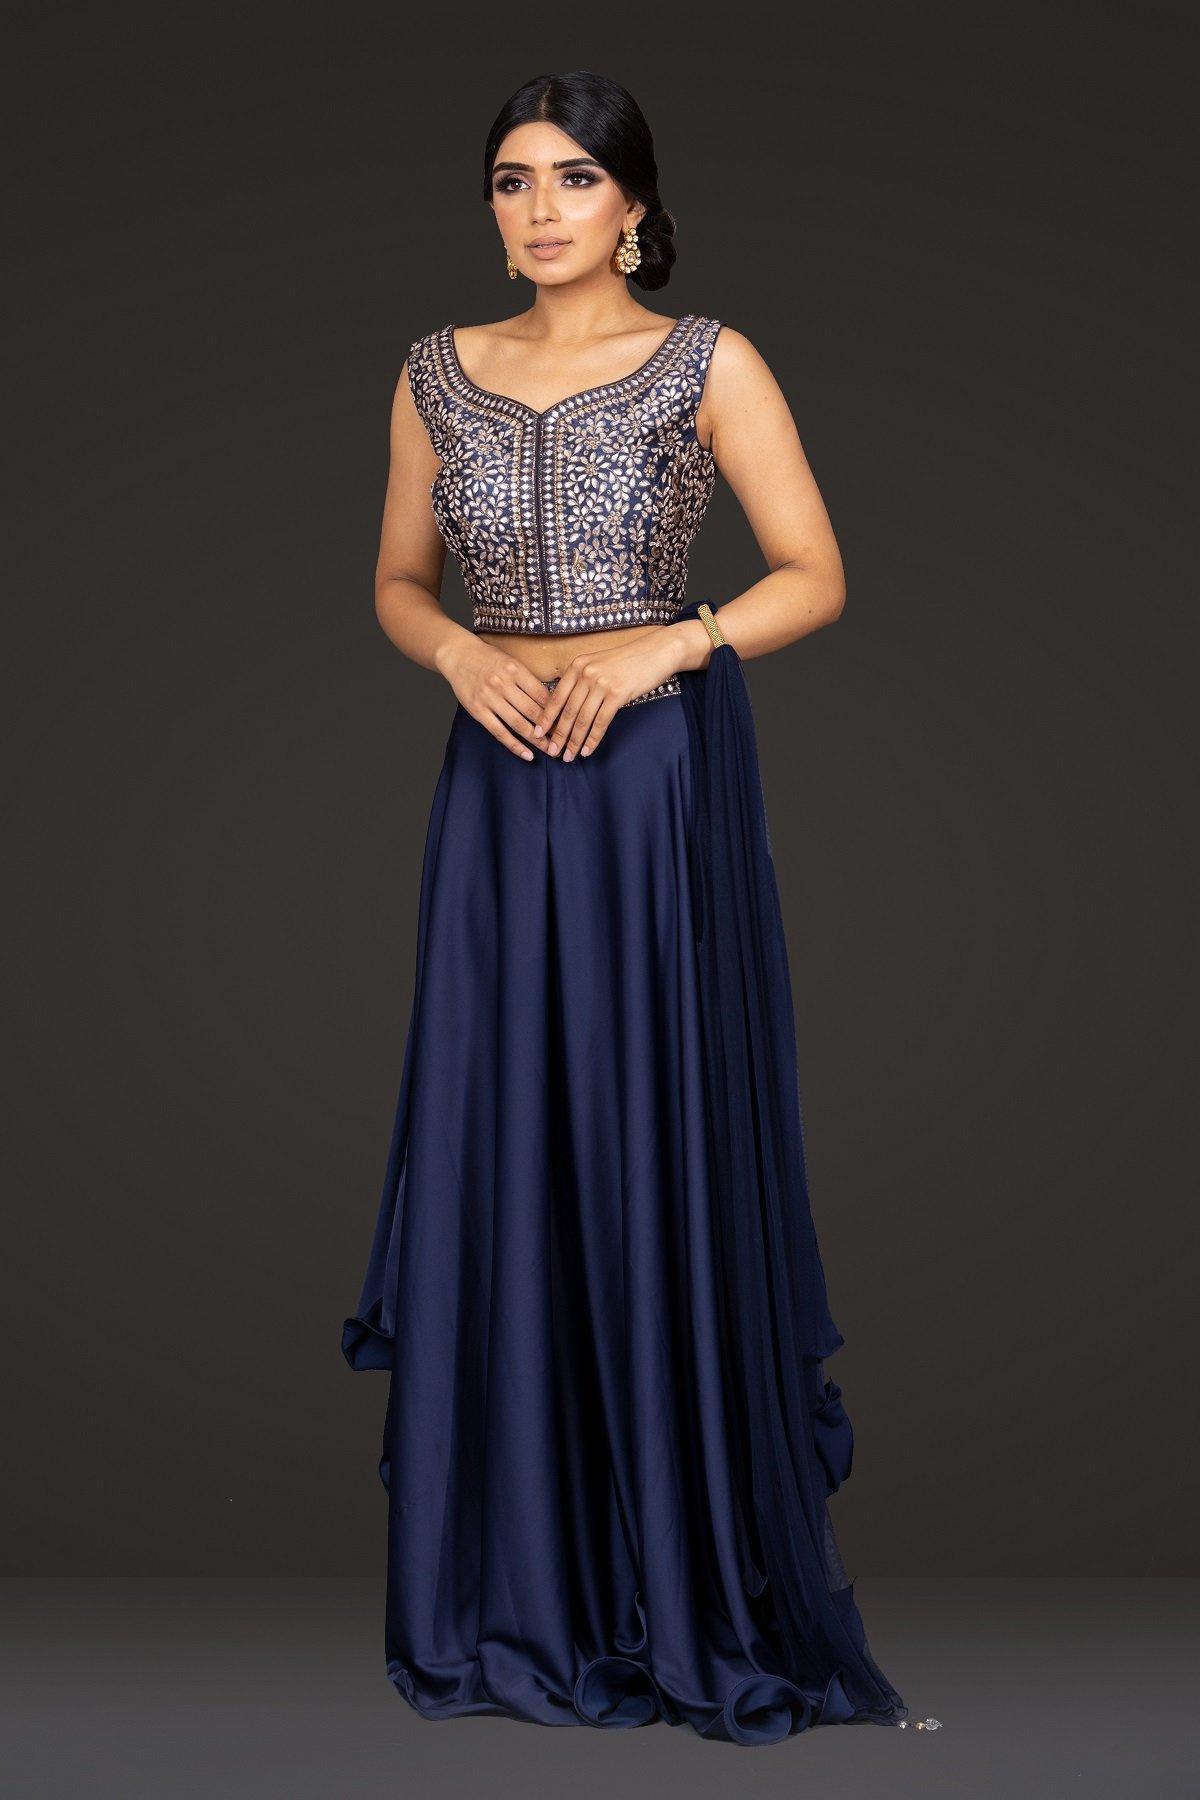 Shop Indian Dresses  Designer Outfits Online UK  Fabanzacouk